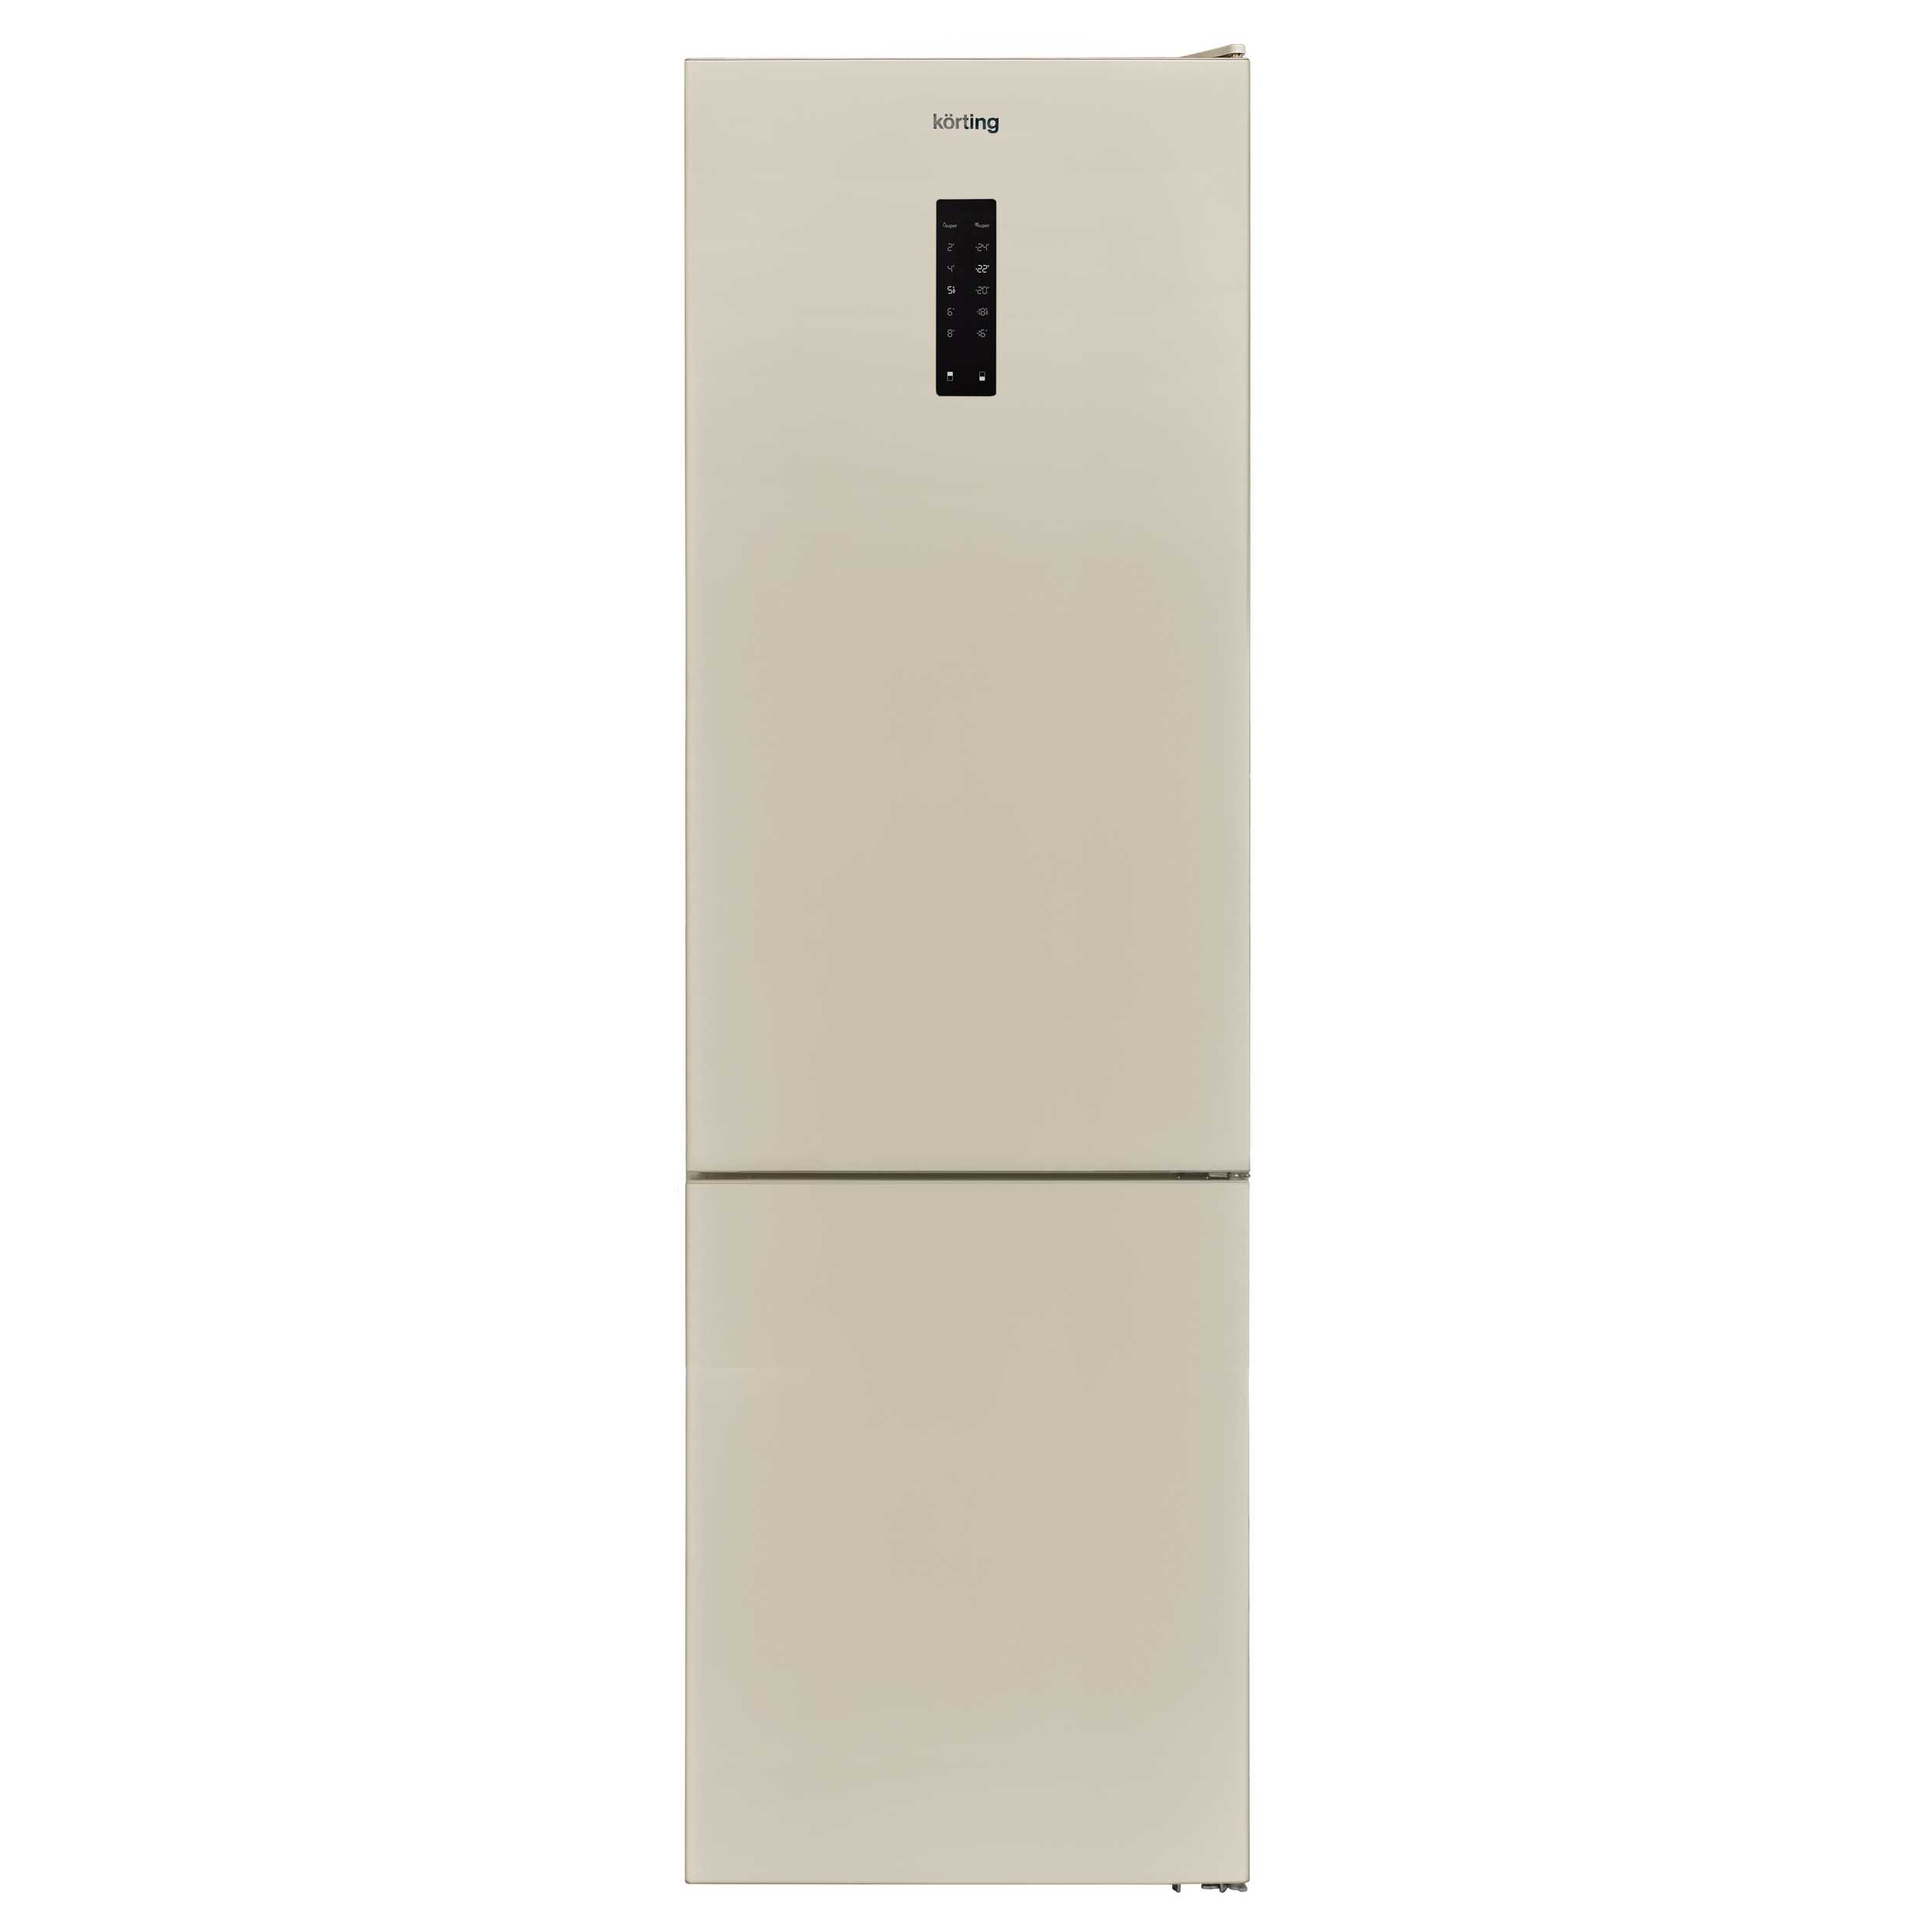 Холодильник Korting KNFC 62010 B бежевый двухкамерный холодильник korting knfc 61869 x